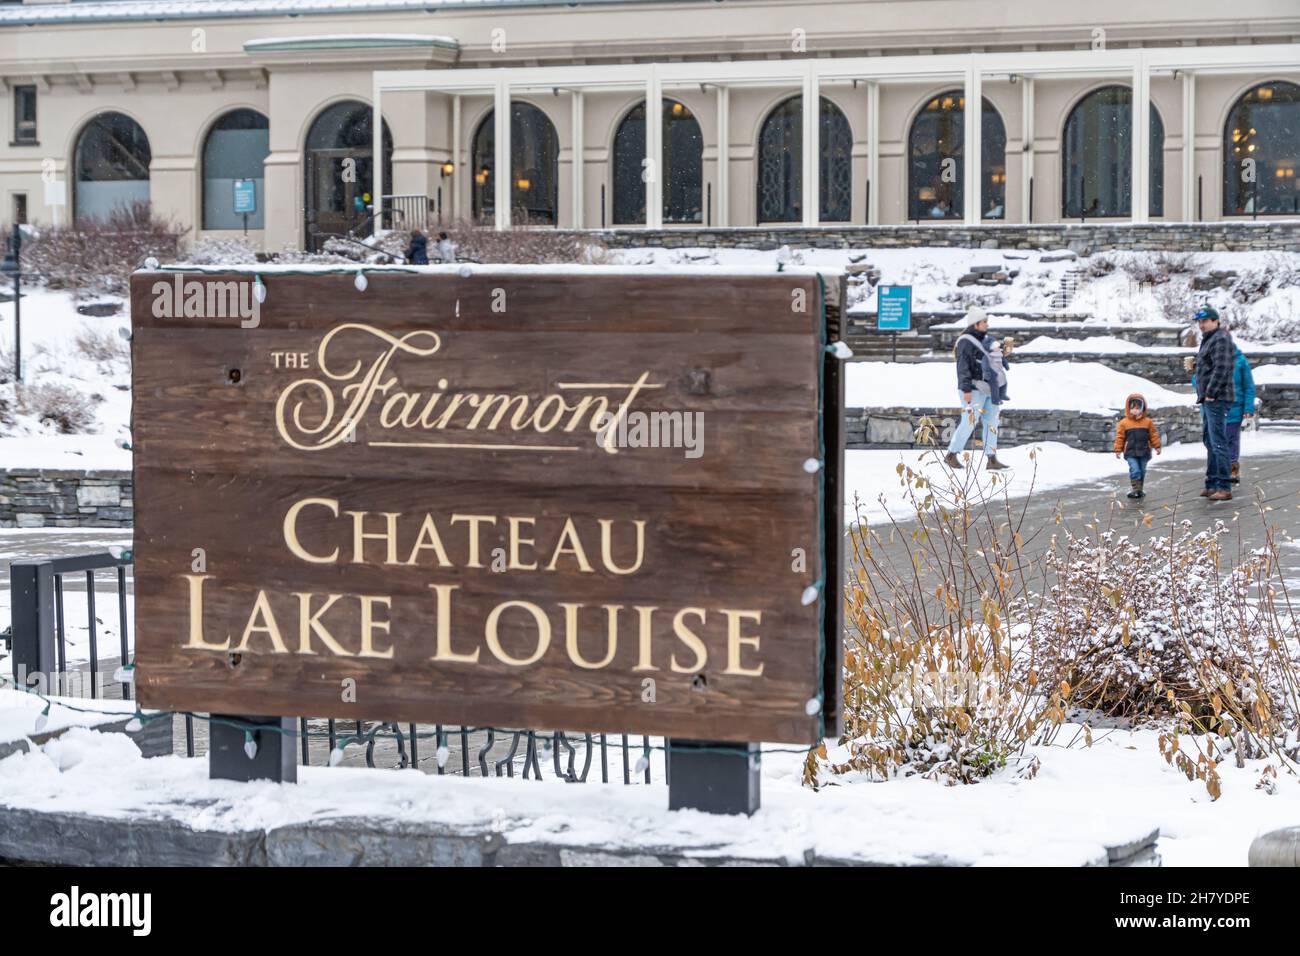 November 6 2021 Lake Louise Alberta Canada - Fairmont Chateau Lake Louise Hotel sign Stock Photo